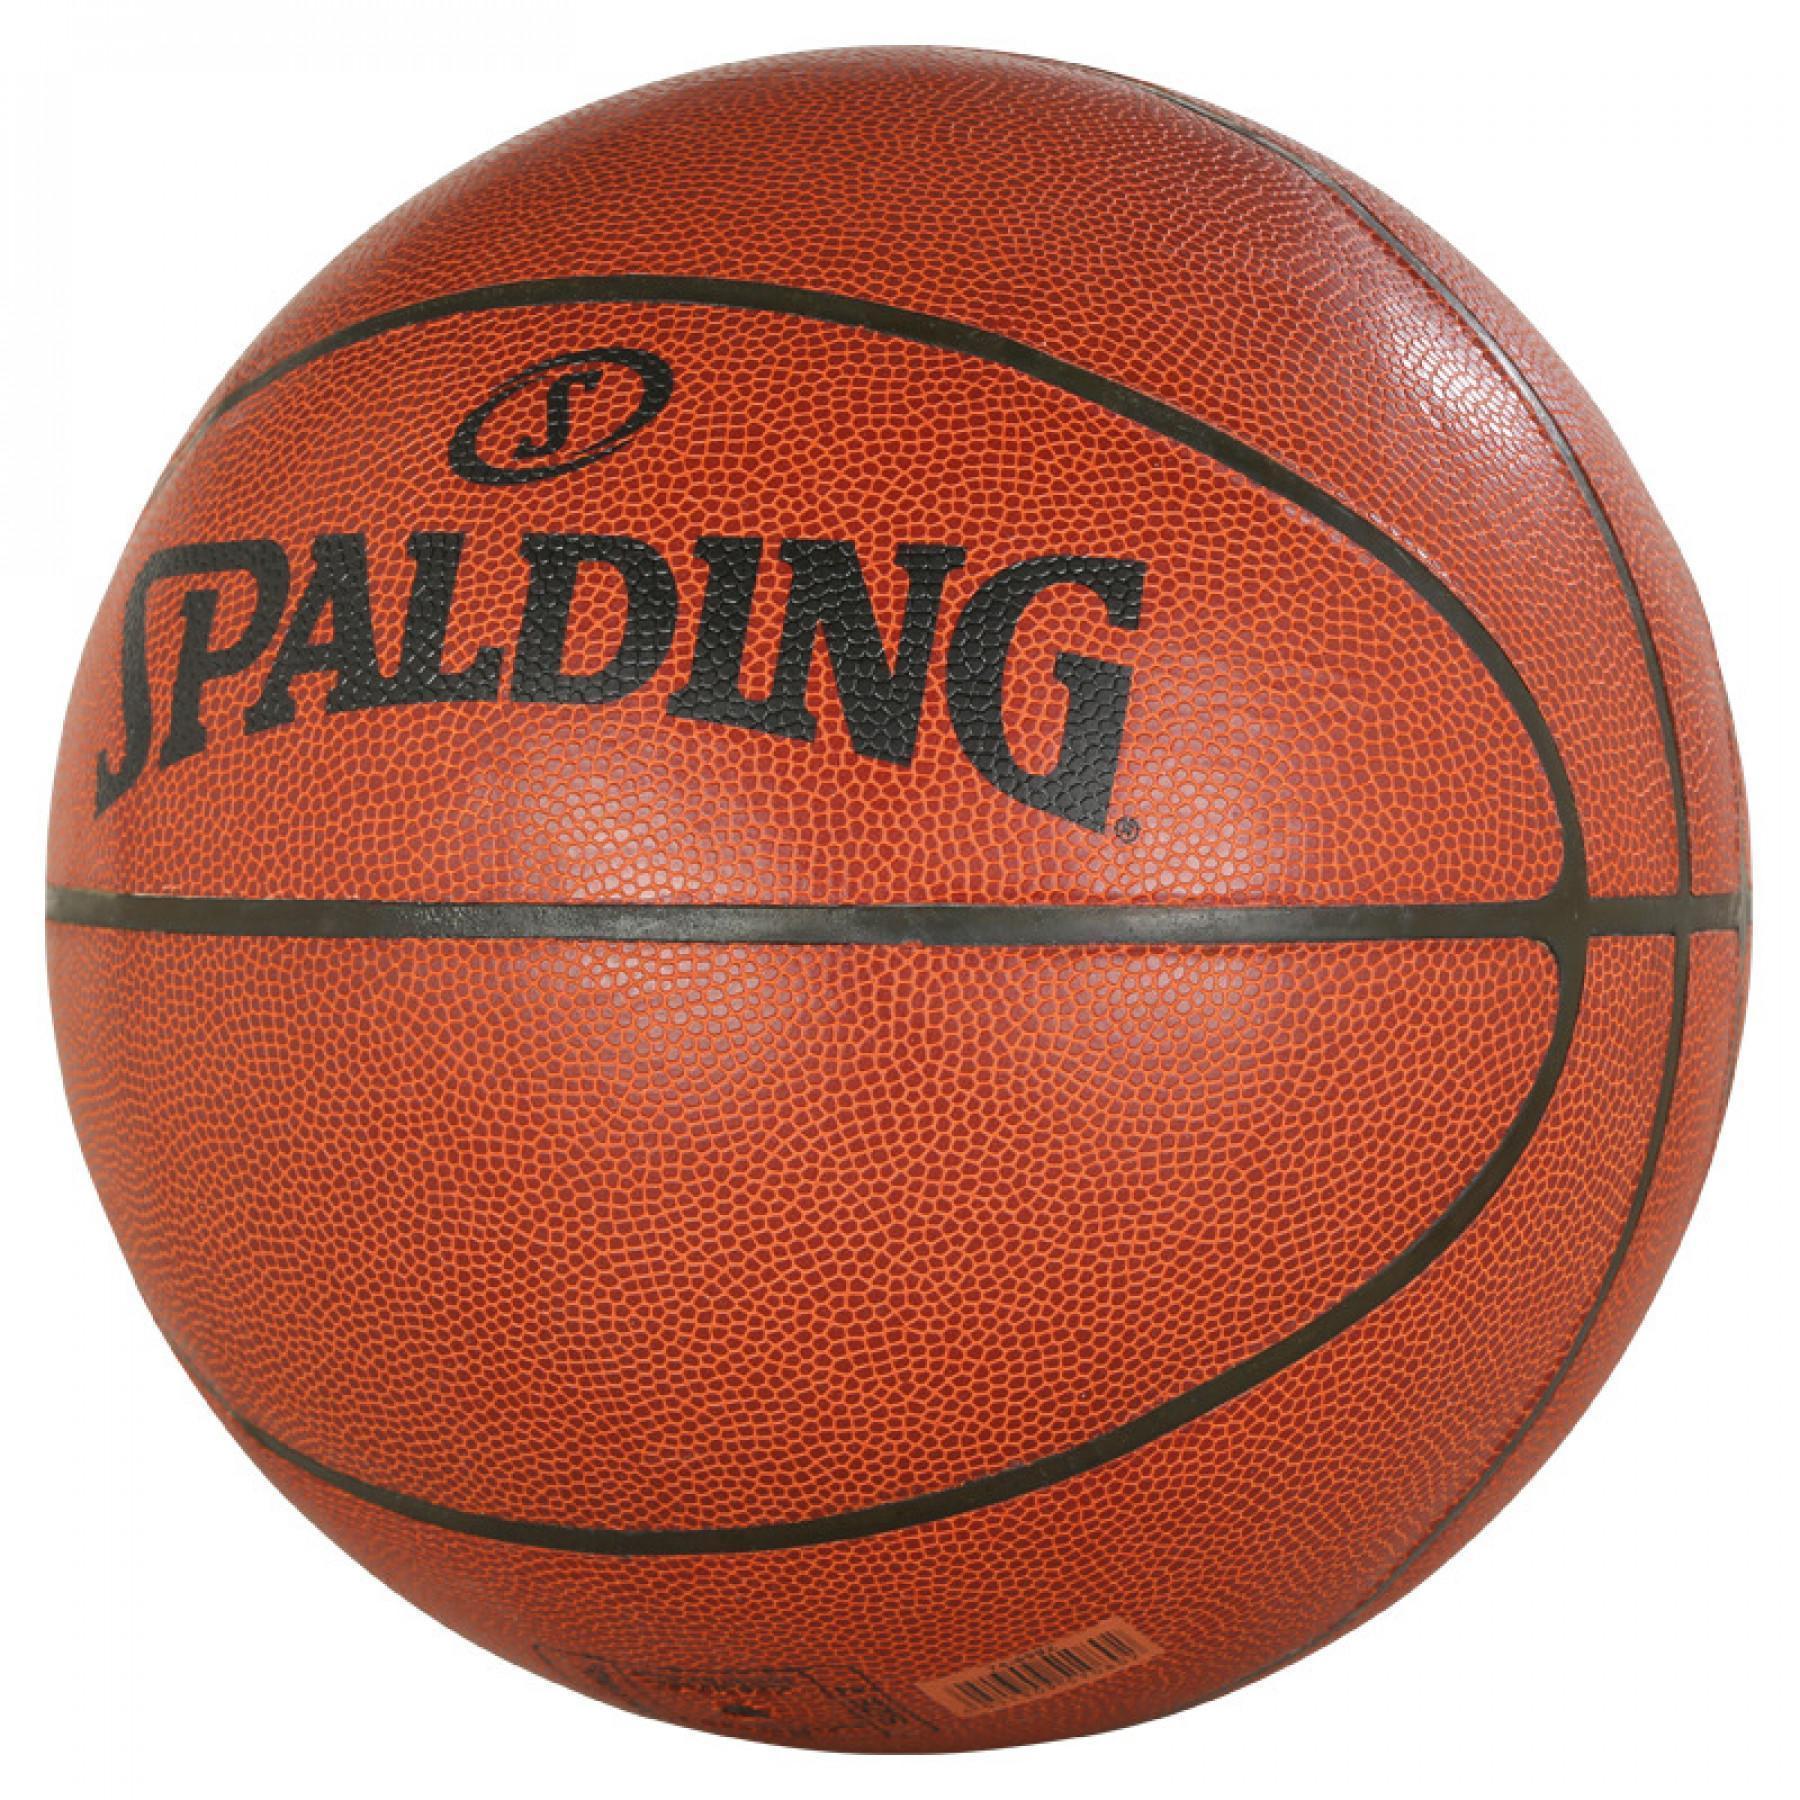 Balon Spalding Customizing (74-699z)